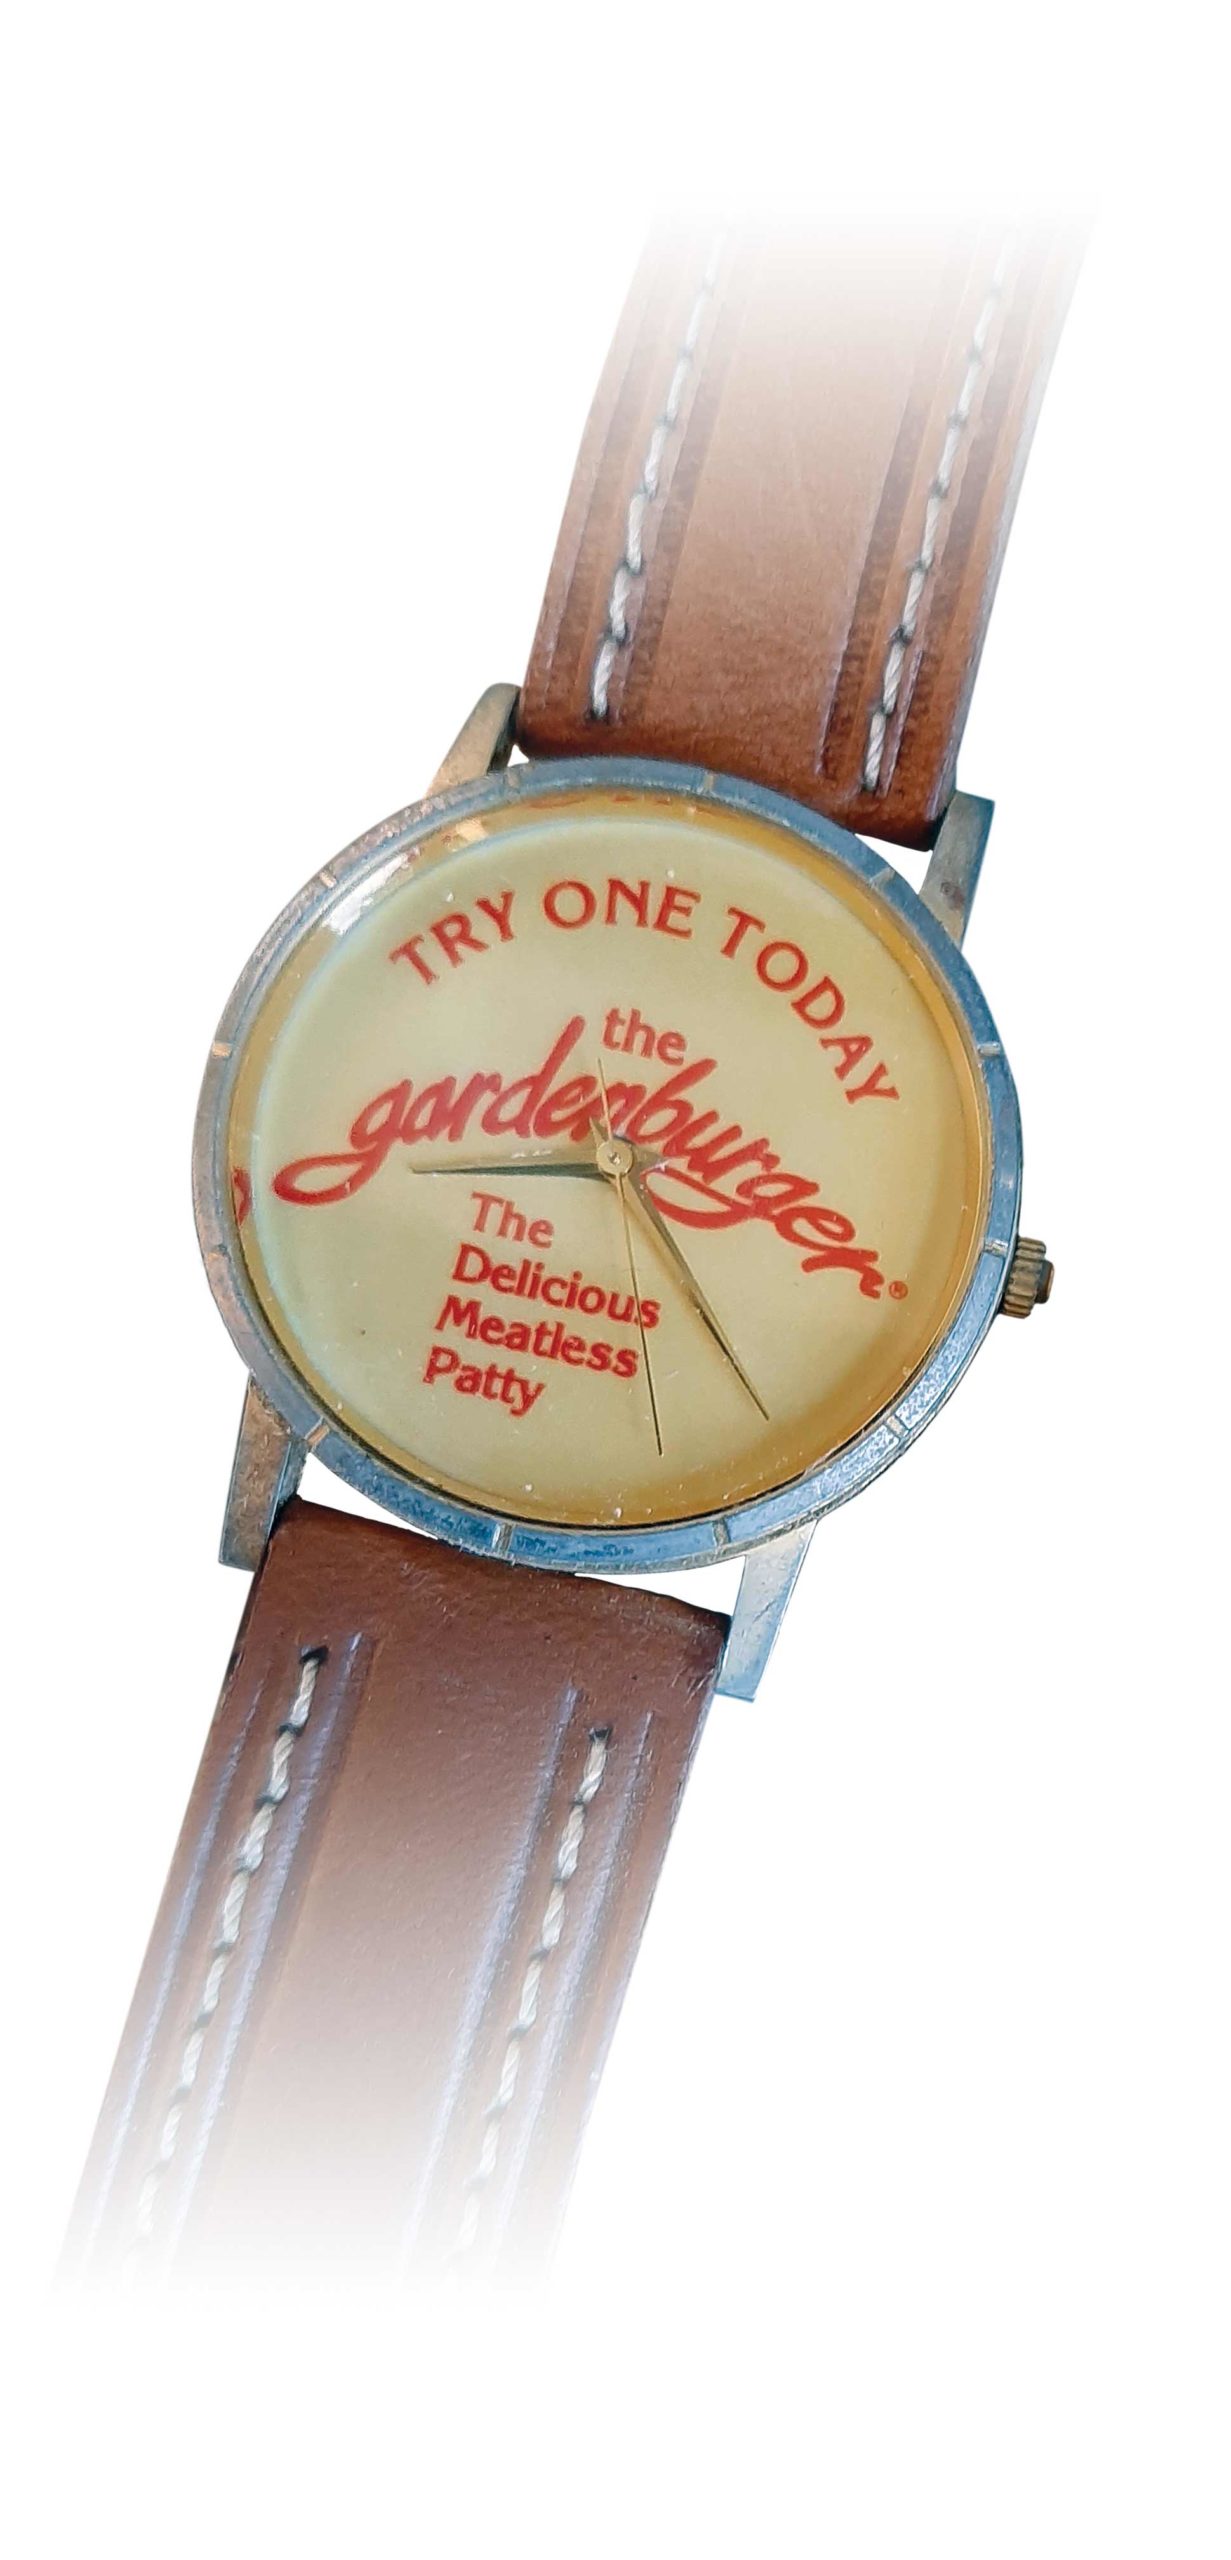 Antique The Gardenburger wrist watch